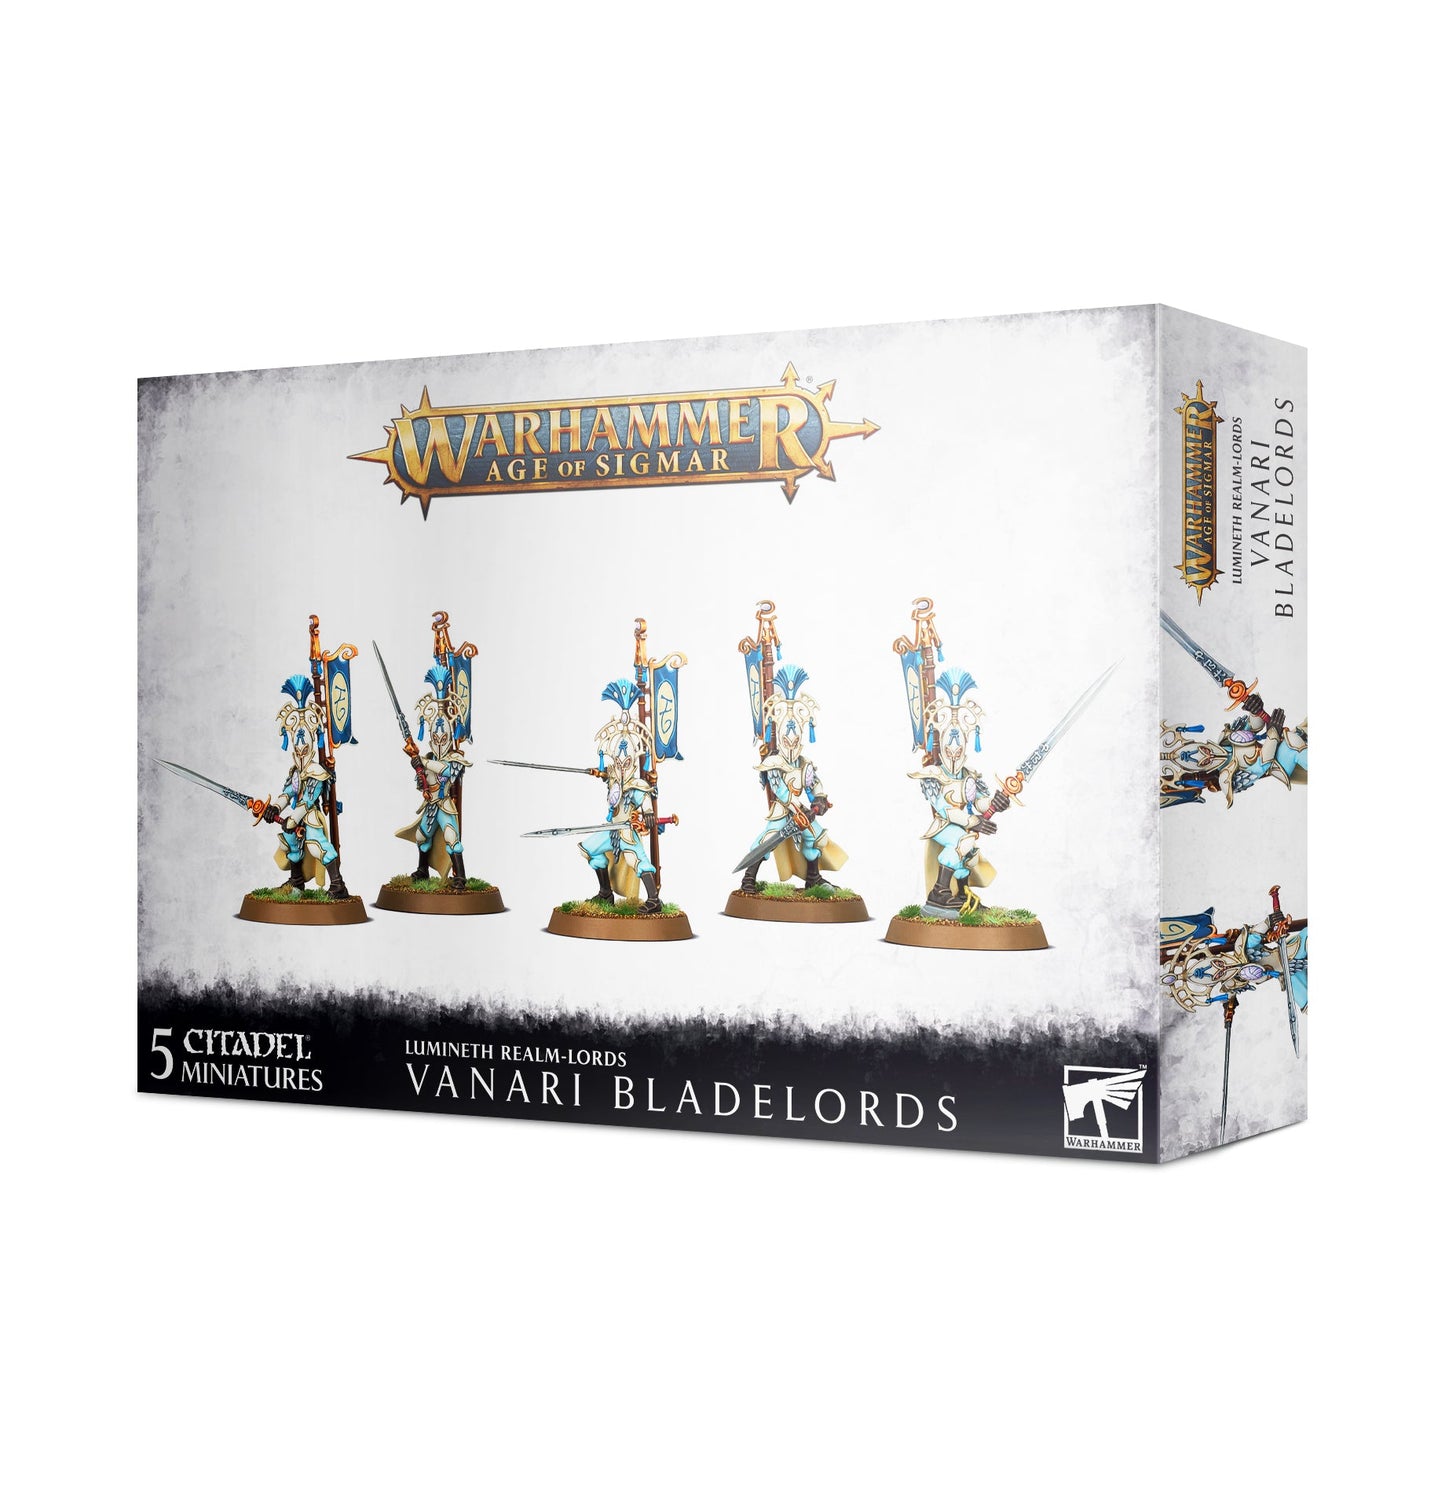 Lumineth Realm-lords: Vanari Bladelords - Gamescape